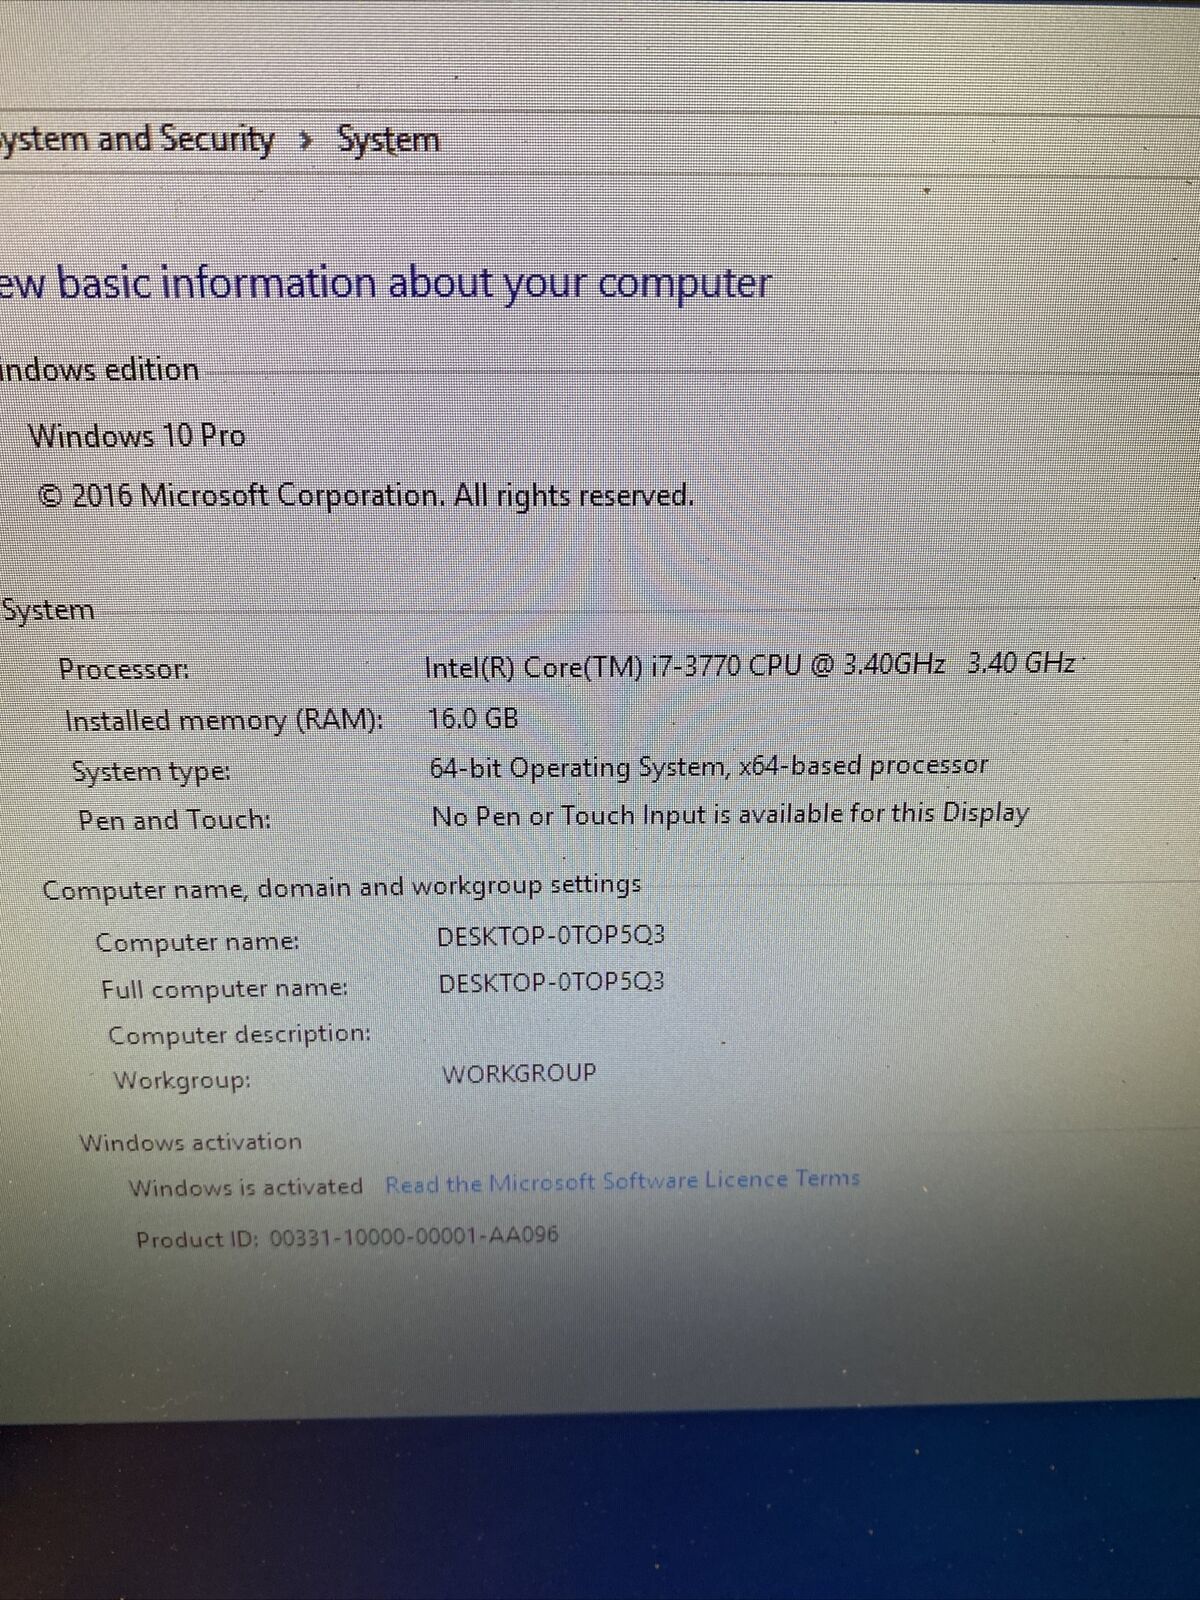 Dell XPS 8500 MT Intel Core i7-3770 3.40GHz 16GB 1 TB HDD Windows 10 PC Desktop